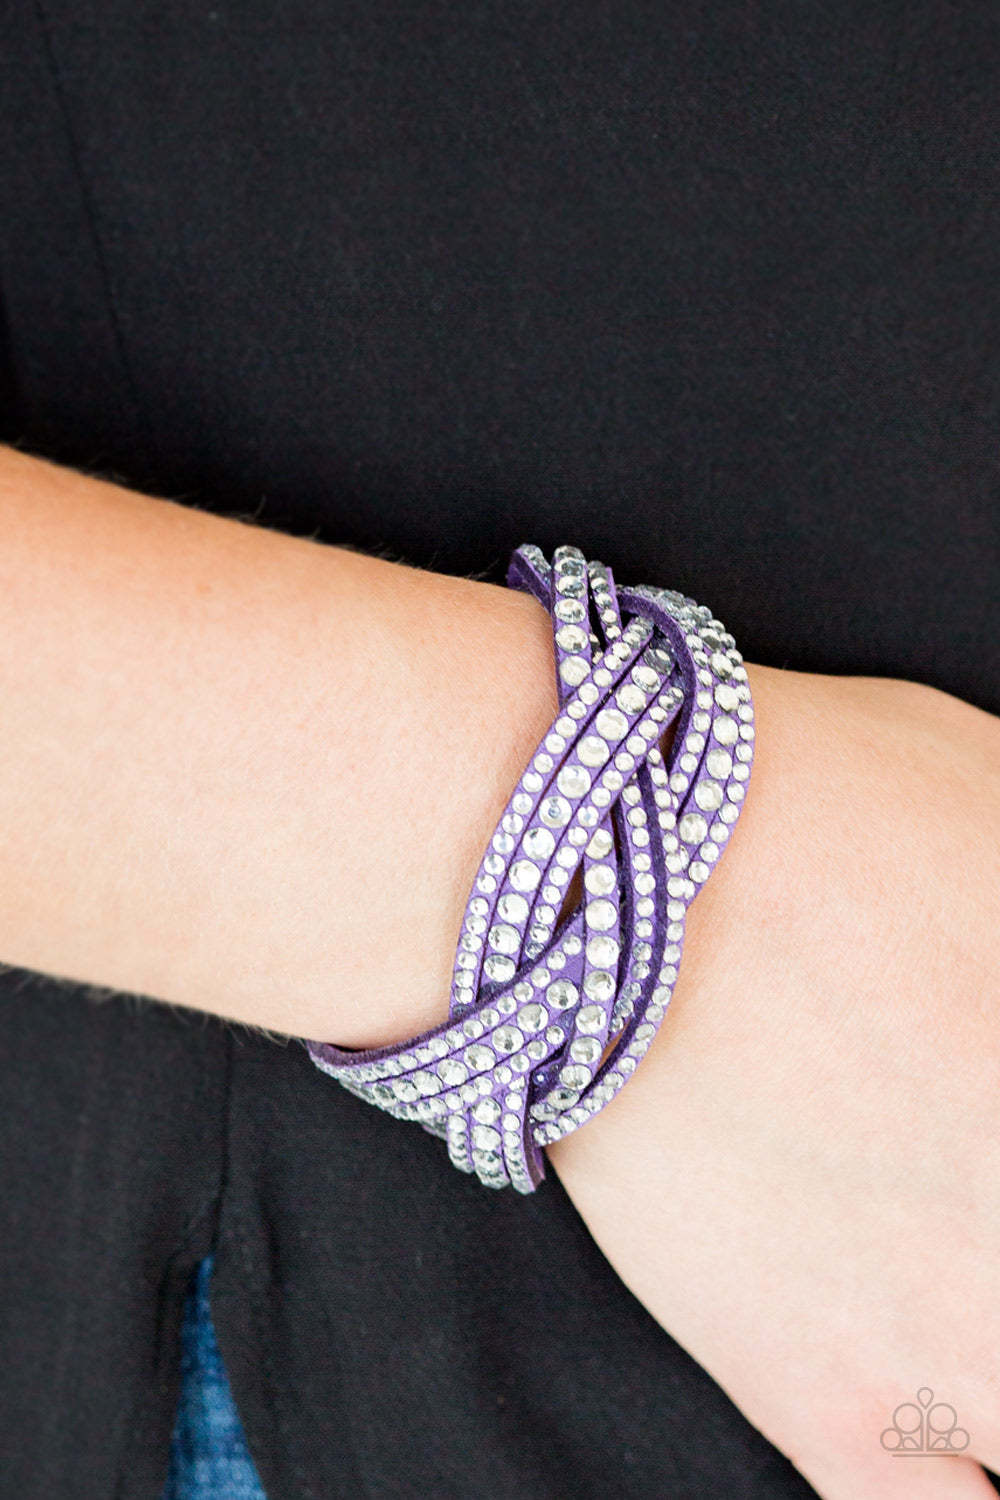 Paparazzi Bring On The Bling Purple Single Wrap Snap Bracelet